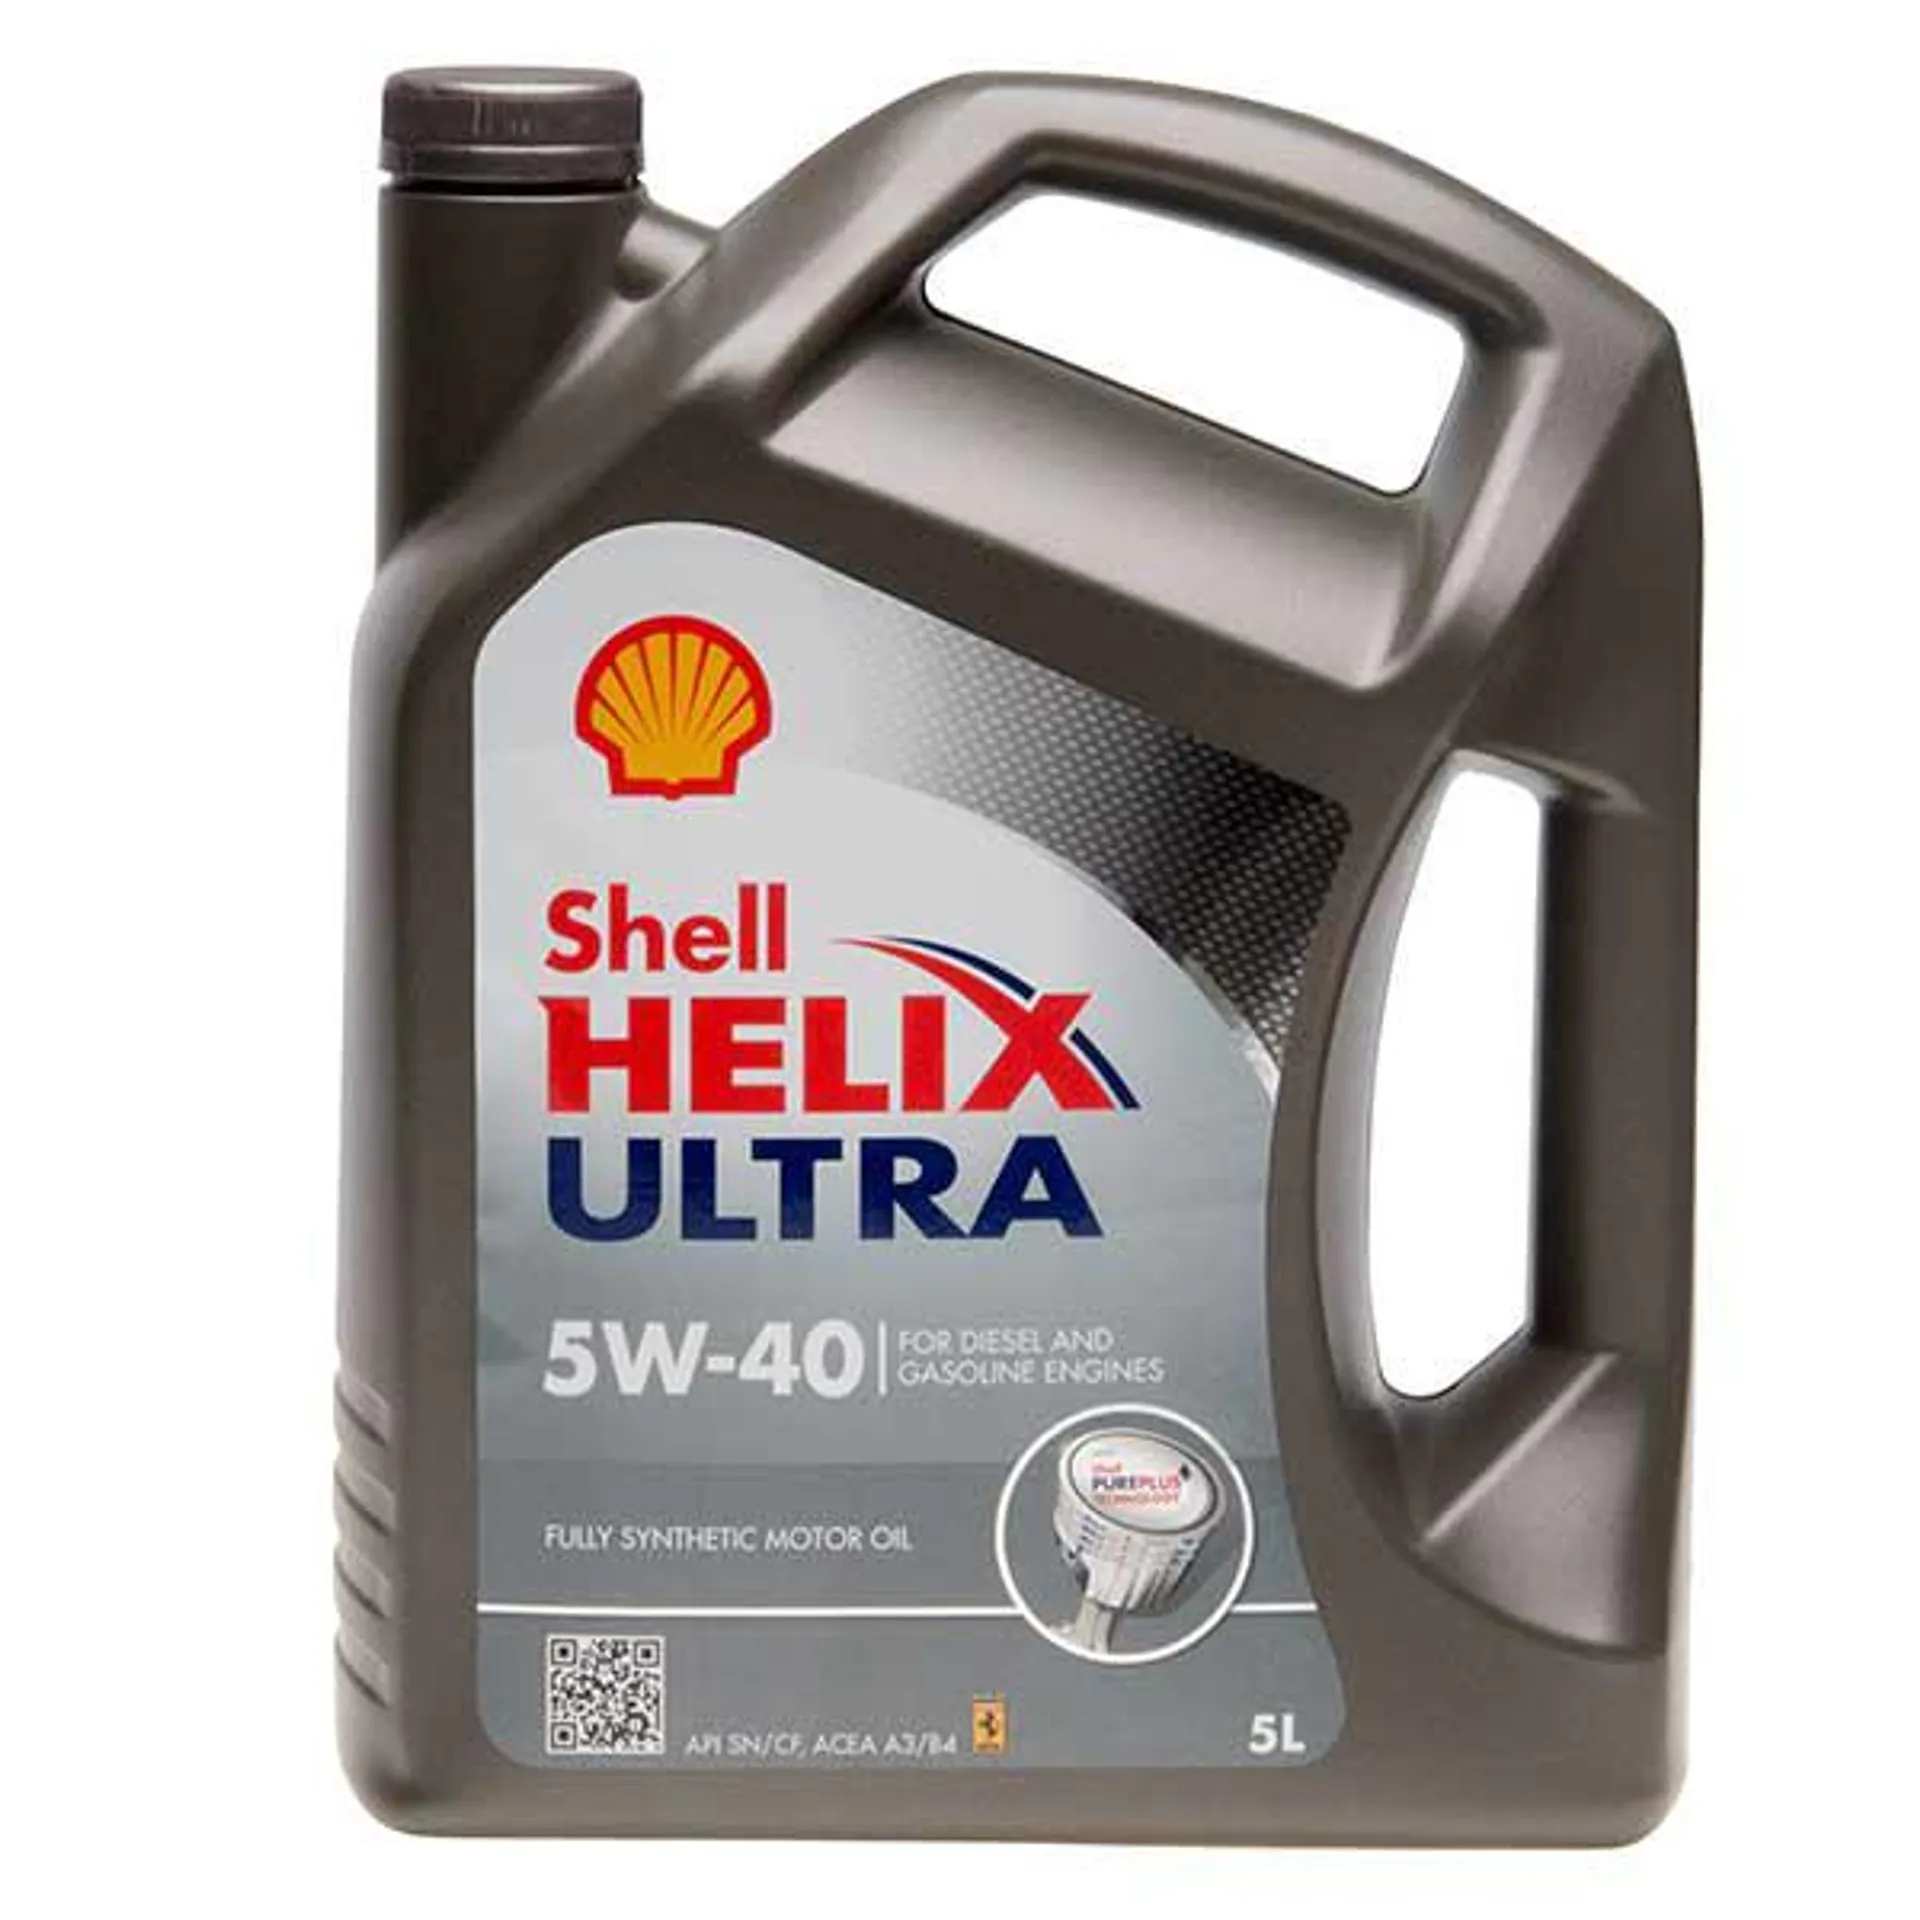 Shell Helix Ultra Engine Oil - 5W-40 - 5Ltr